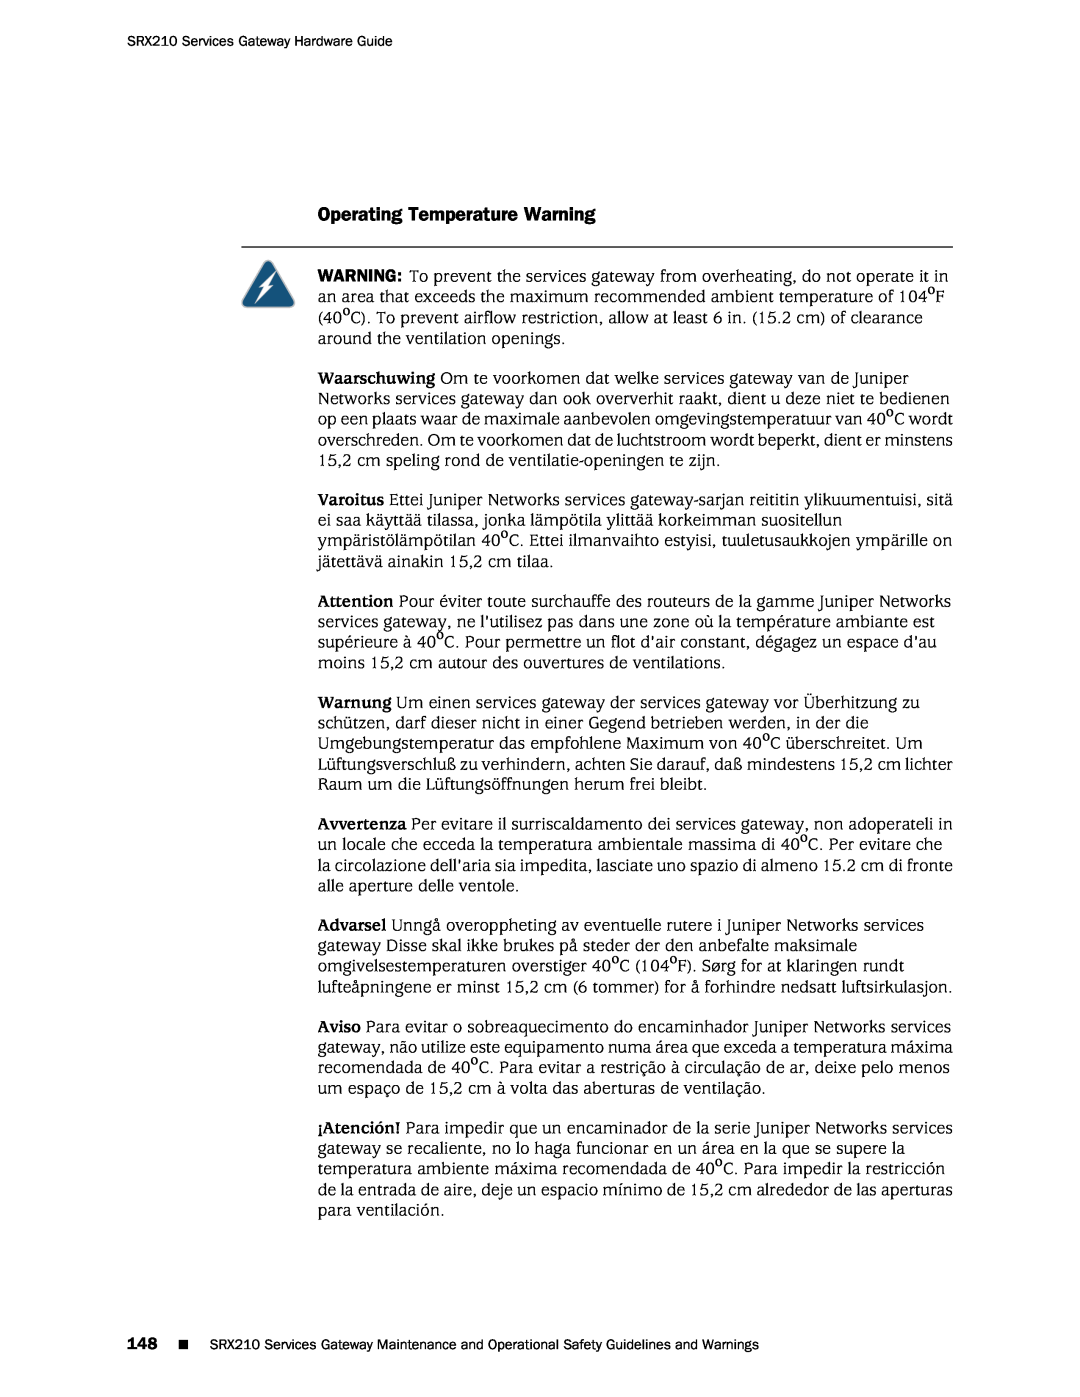 Juniper Networks SRX 210 manual Operating Temperature Warning 